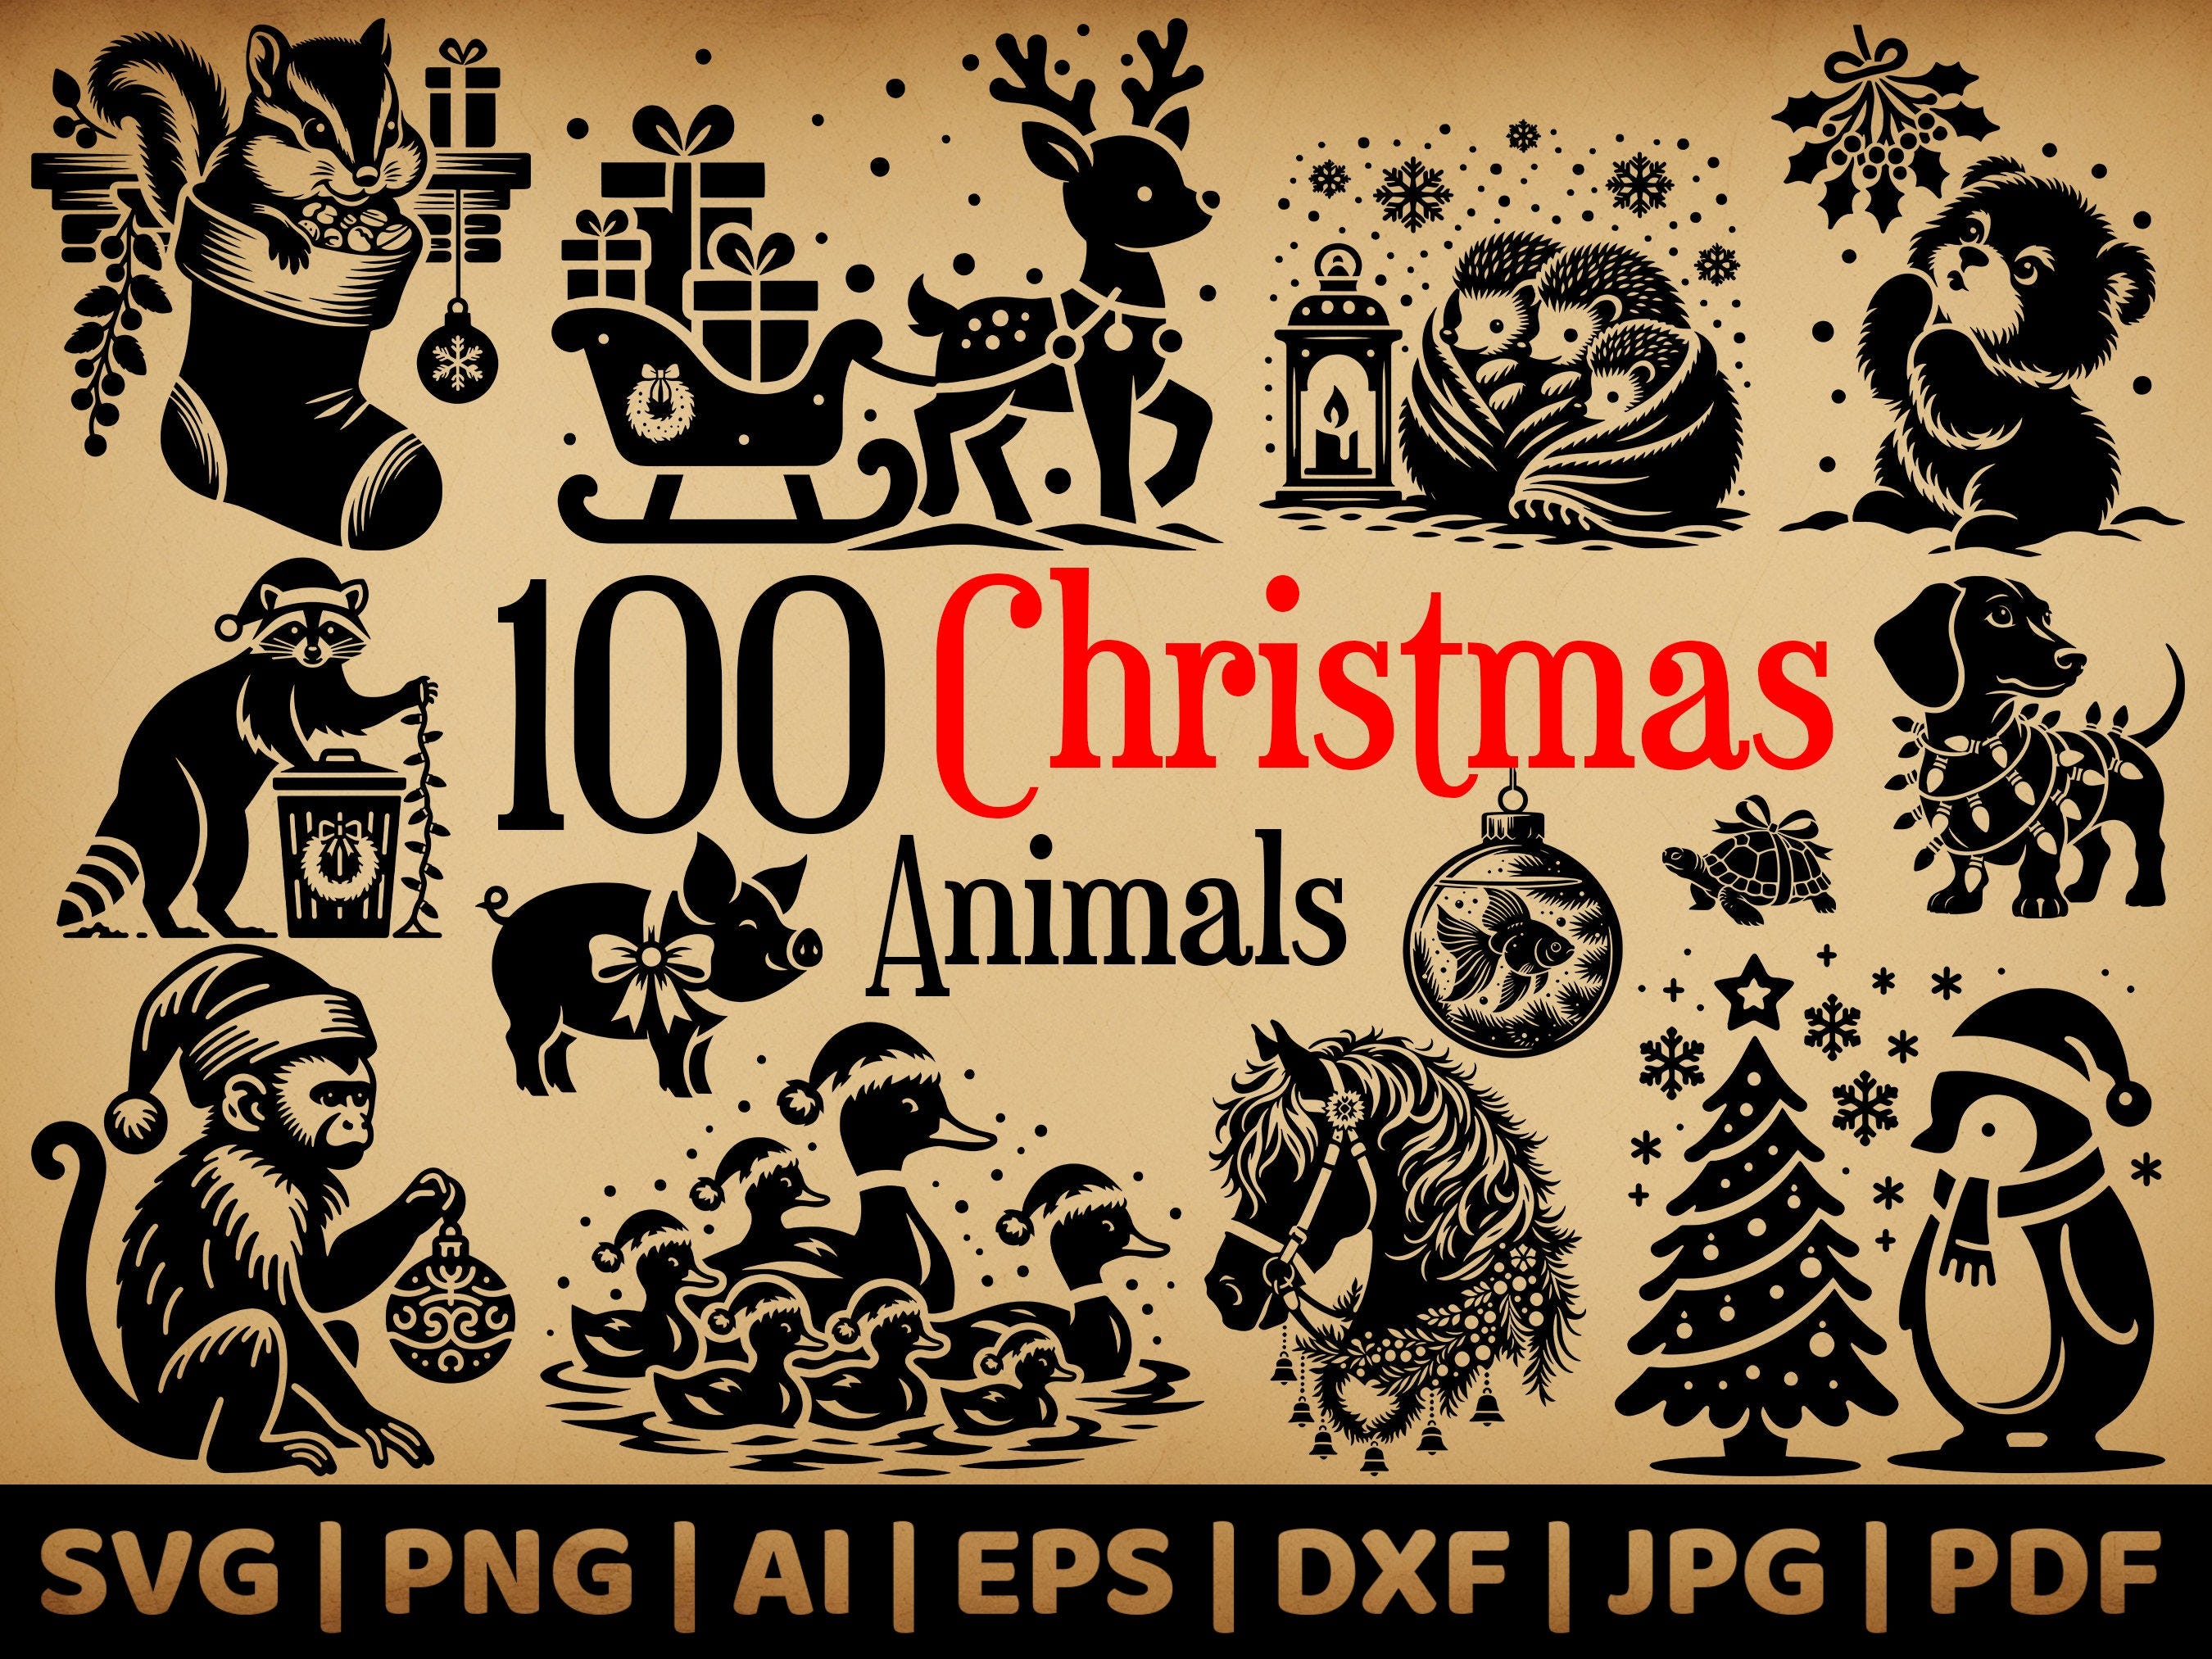 100 Christmas Animal Bundle | Commercial Use Vector Graphics | Svg, Png, Dxf, Eps, Pdf, Ai, Jpg Formats | Sublimation, Laser Engraving, Logo